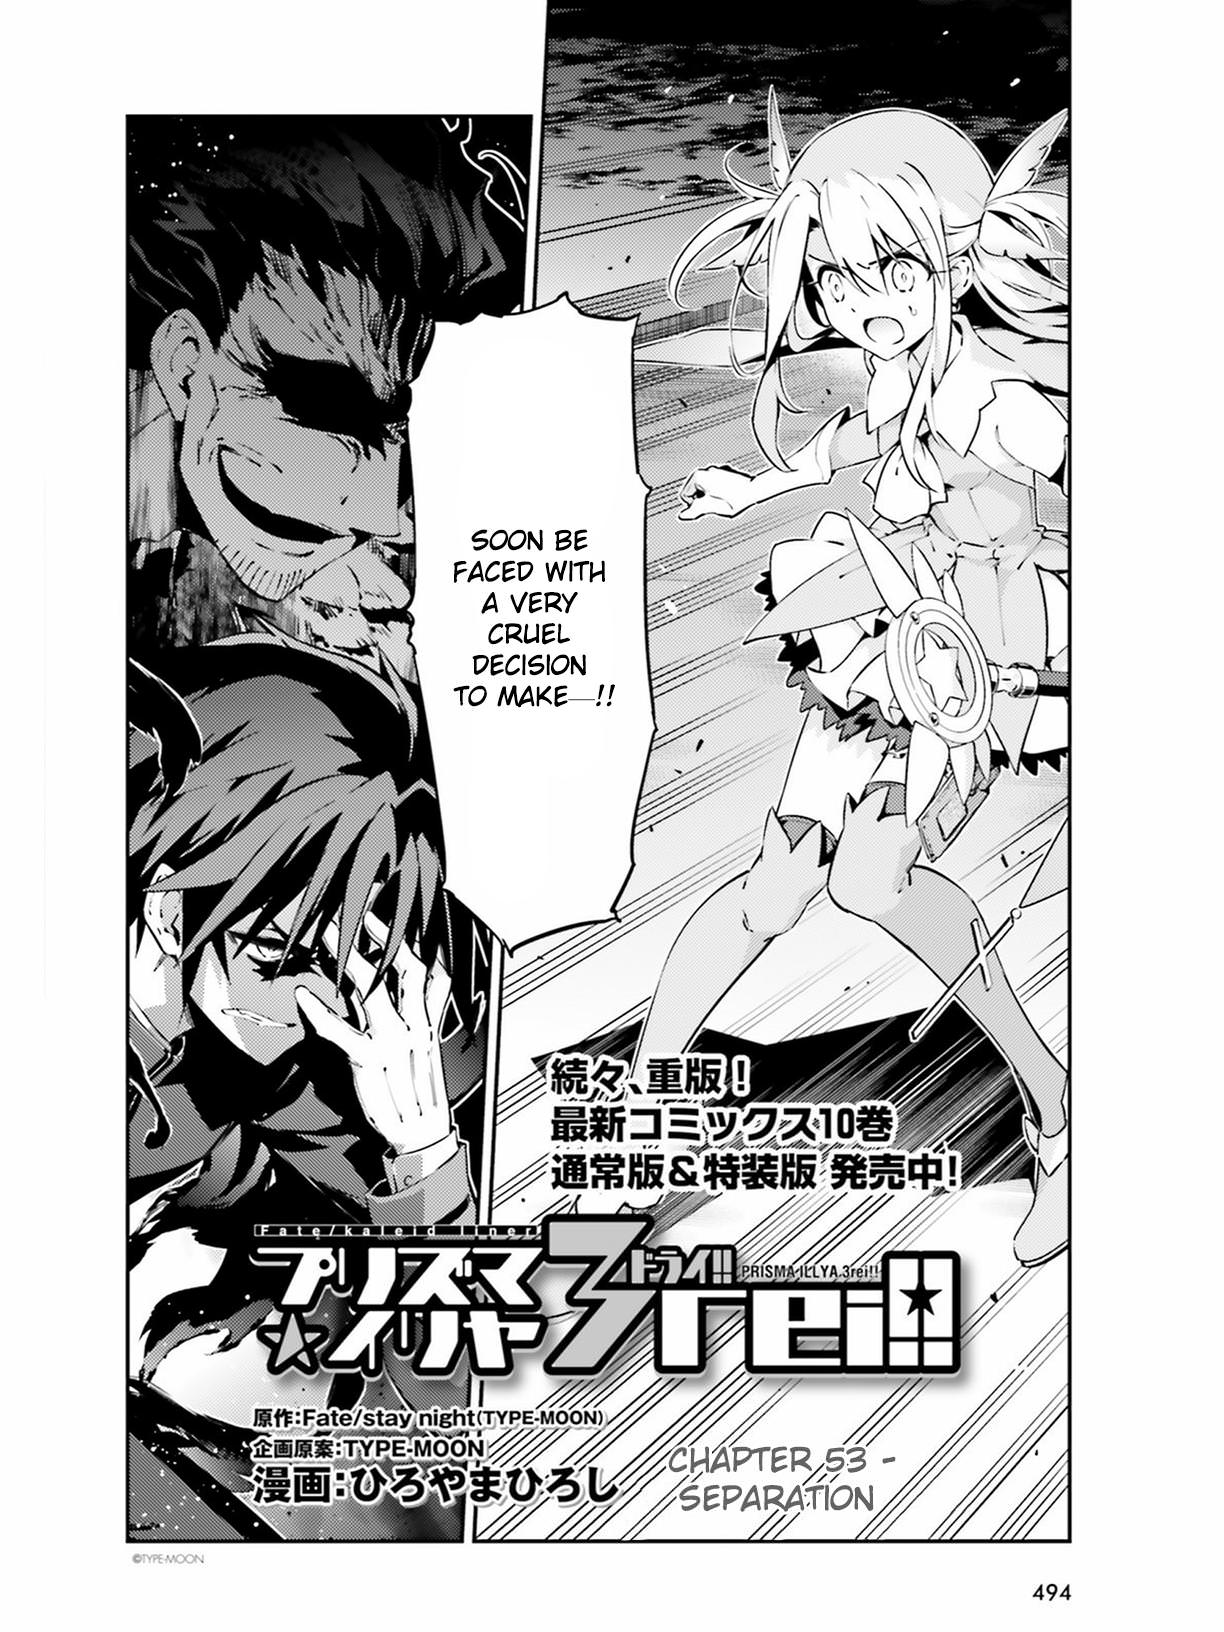 Fate/kaleid liner PRISMA☆ILLYA 3rei!! Ch. 53.1 Separation